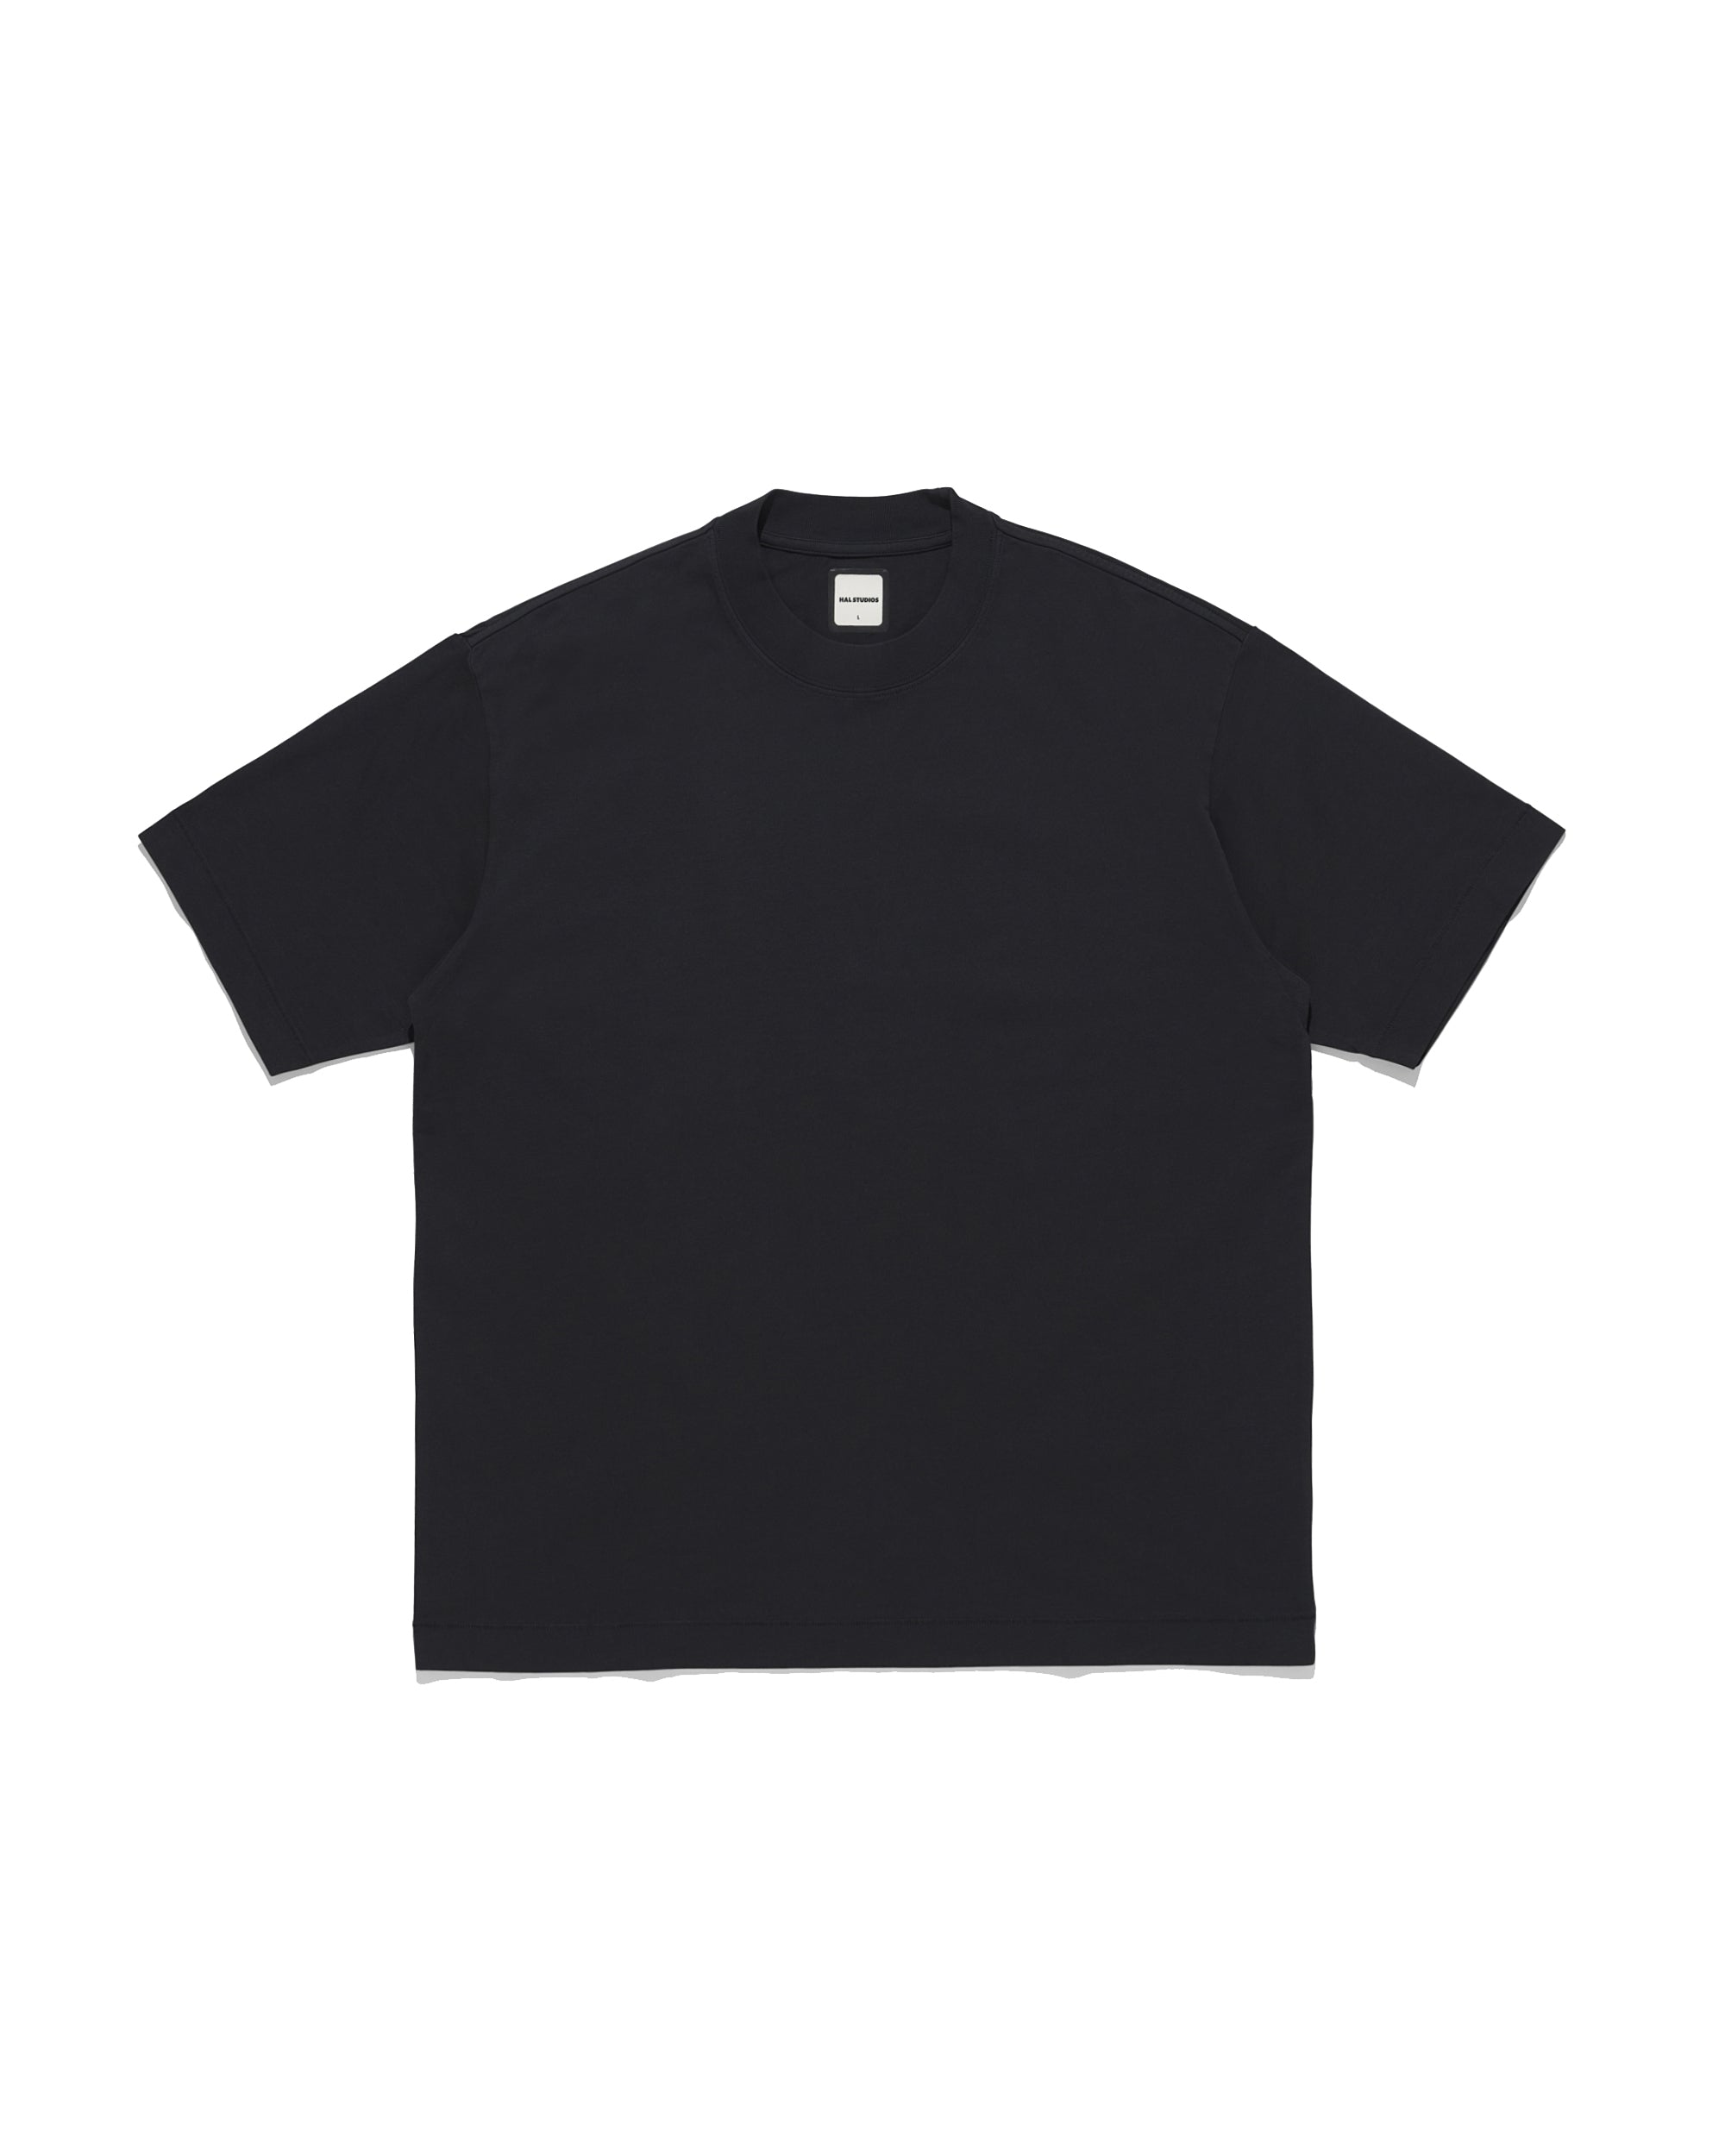 Studio T-Shirt - Black